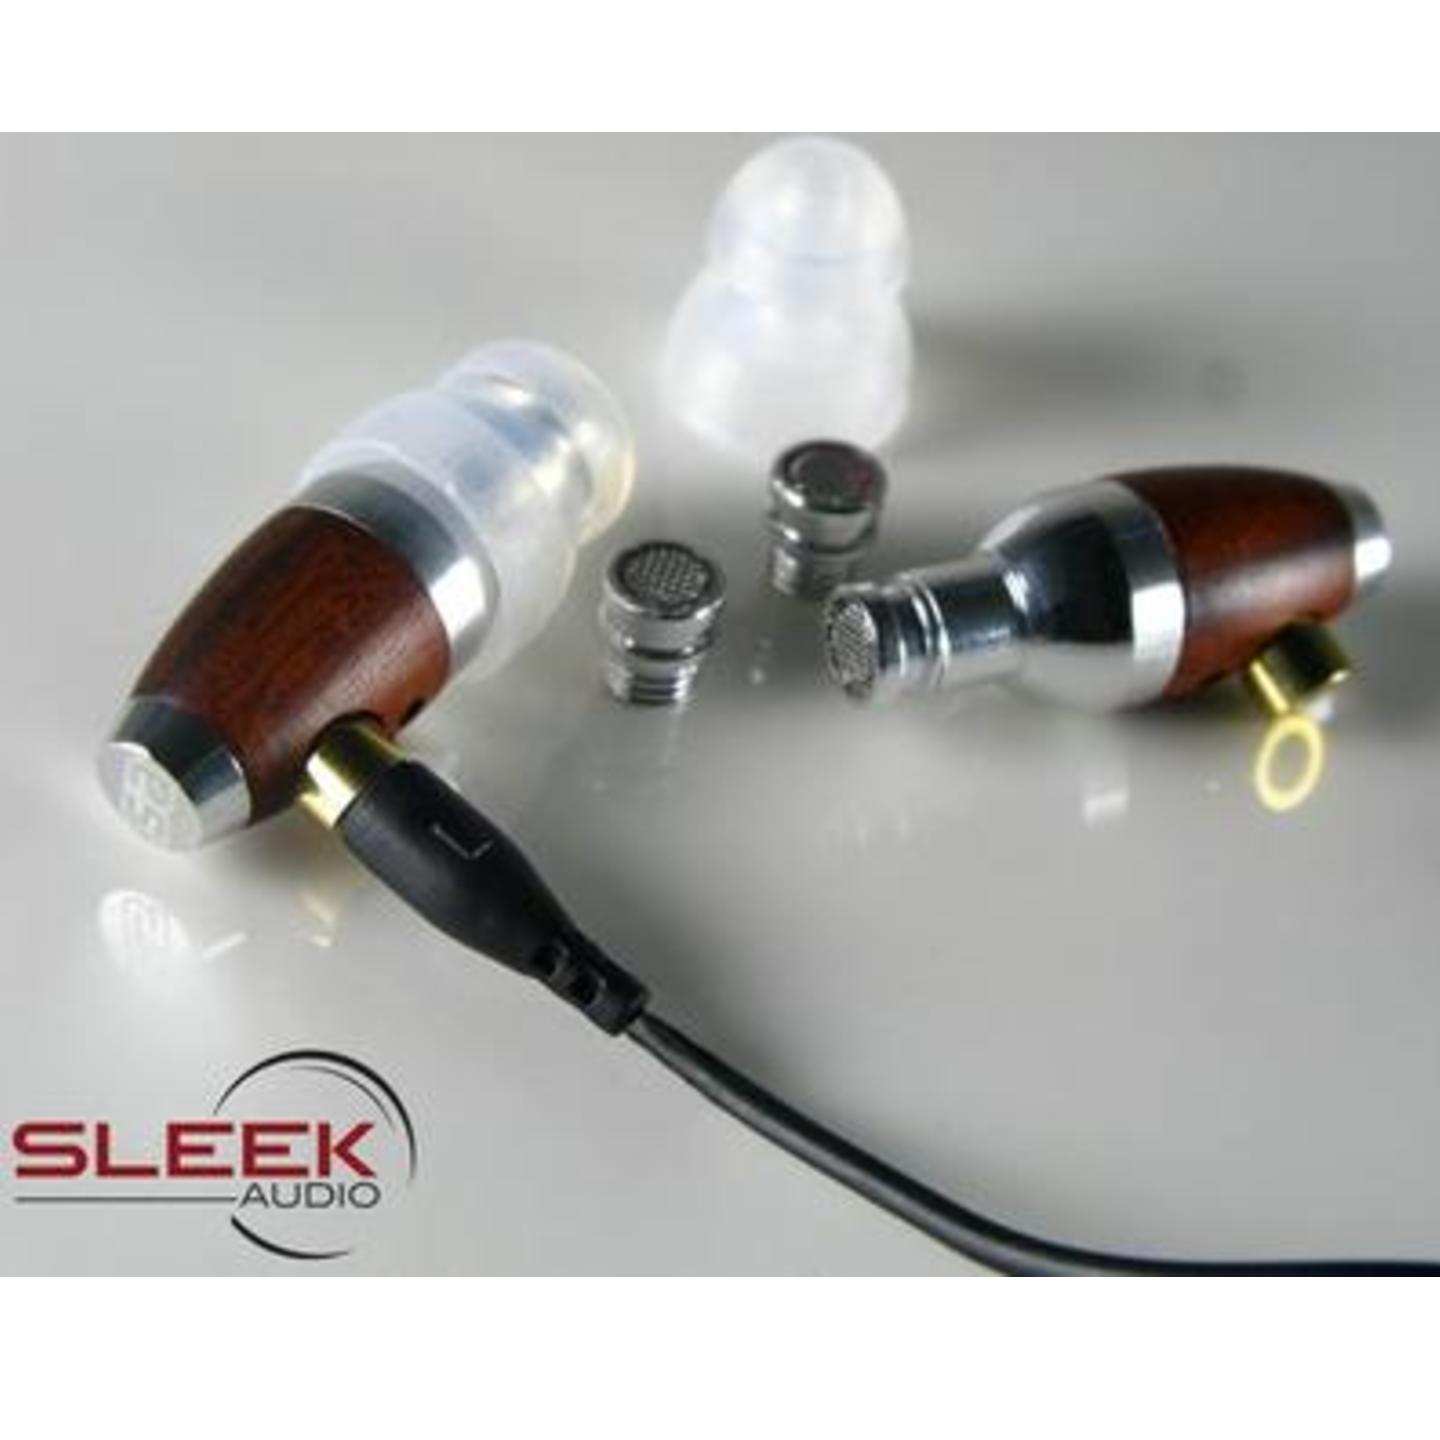 [USA] Sleek Audio SA1 Siam Rosewood Detachable Earphones